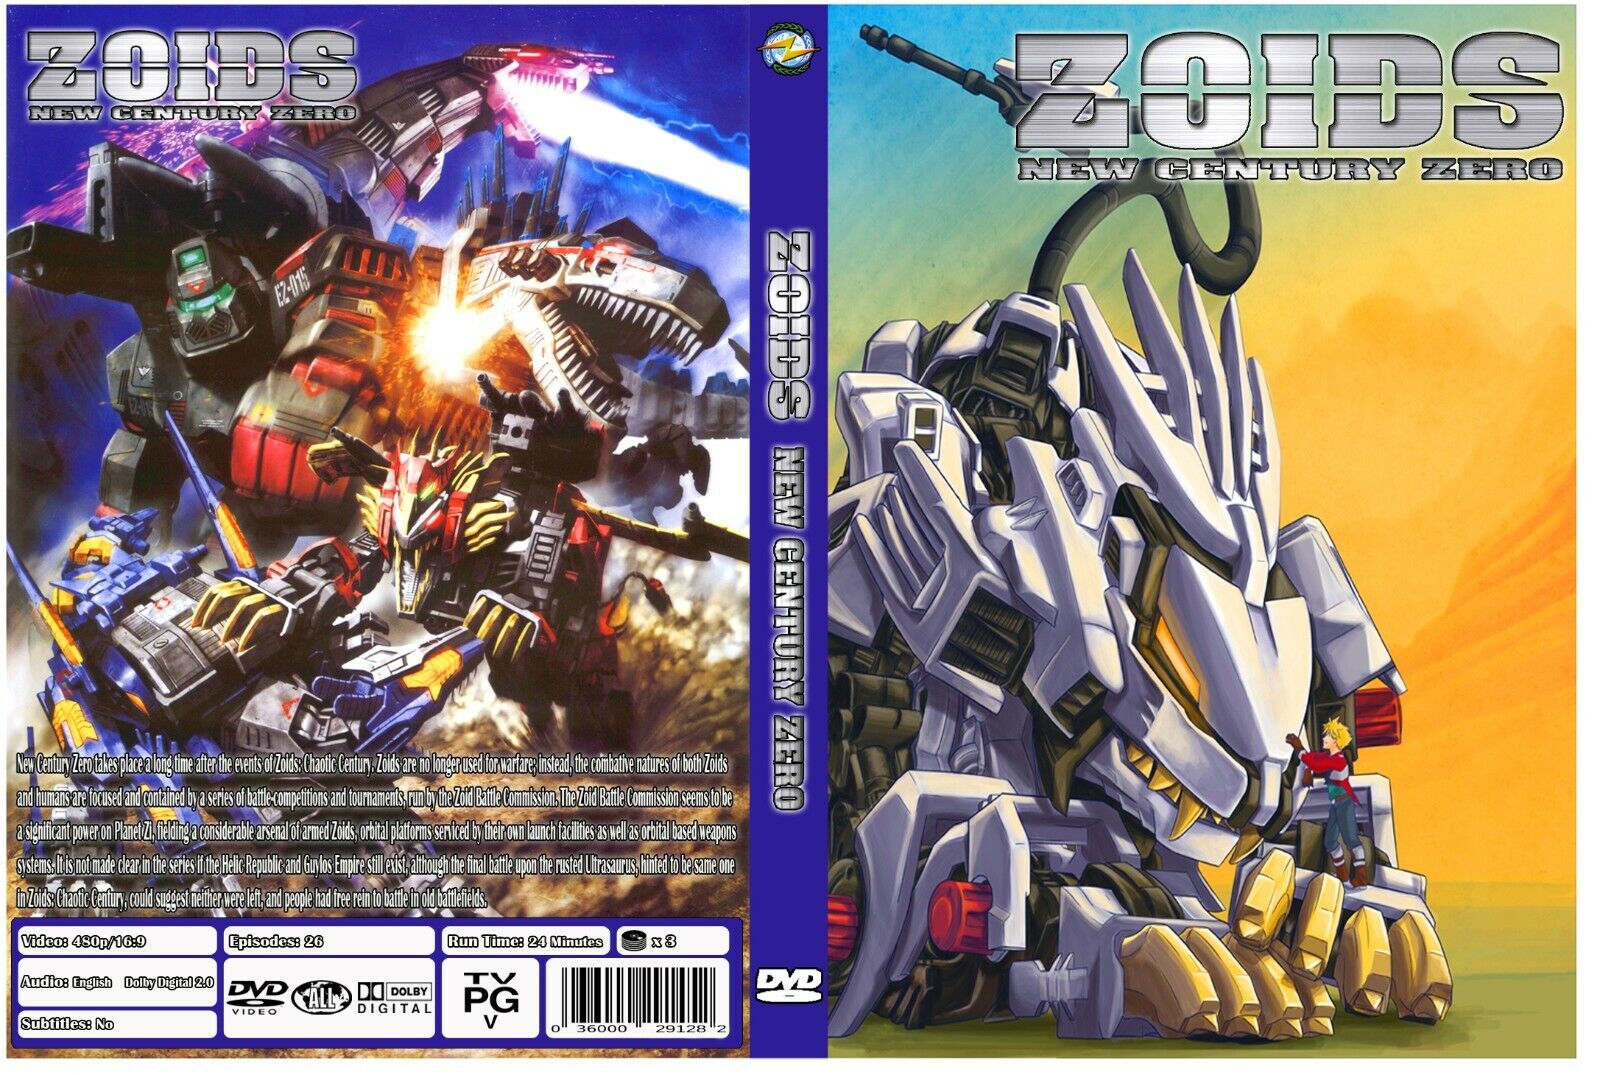 Zoids New Century Zero Anime Complete Series Episodes 1-26 English Audio